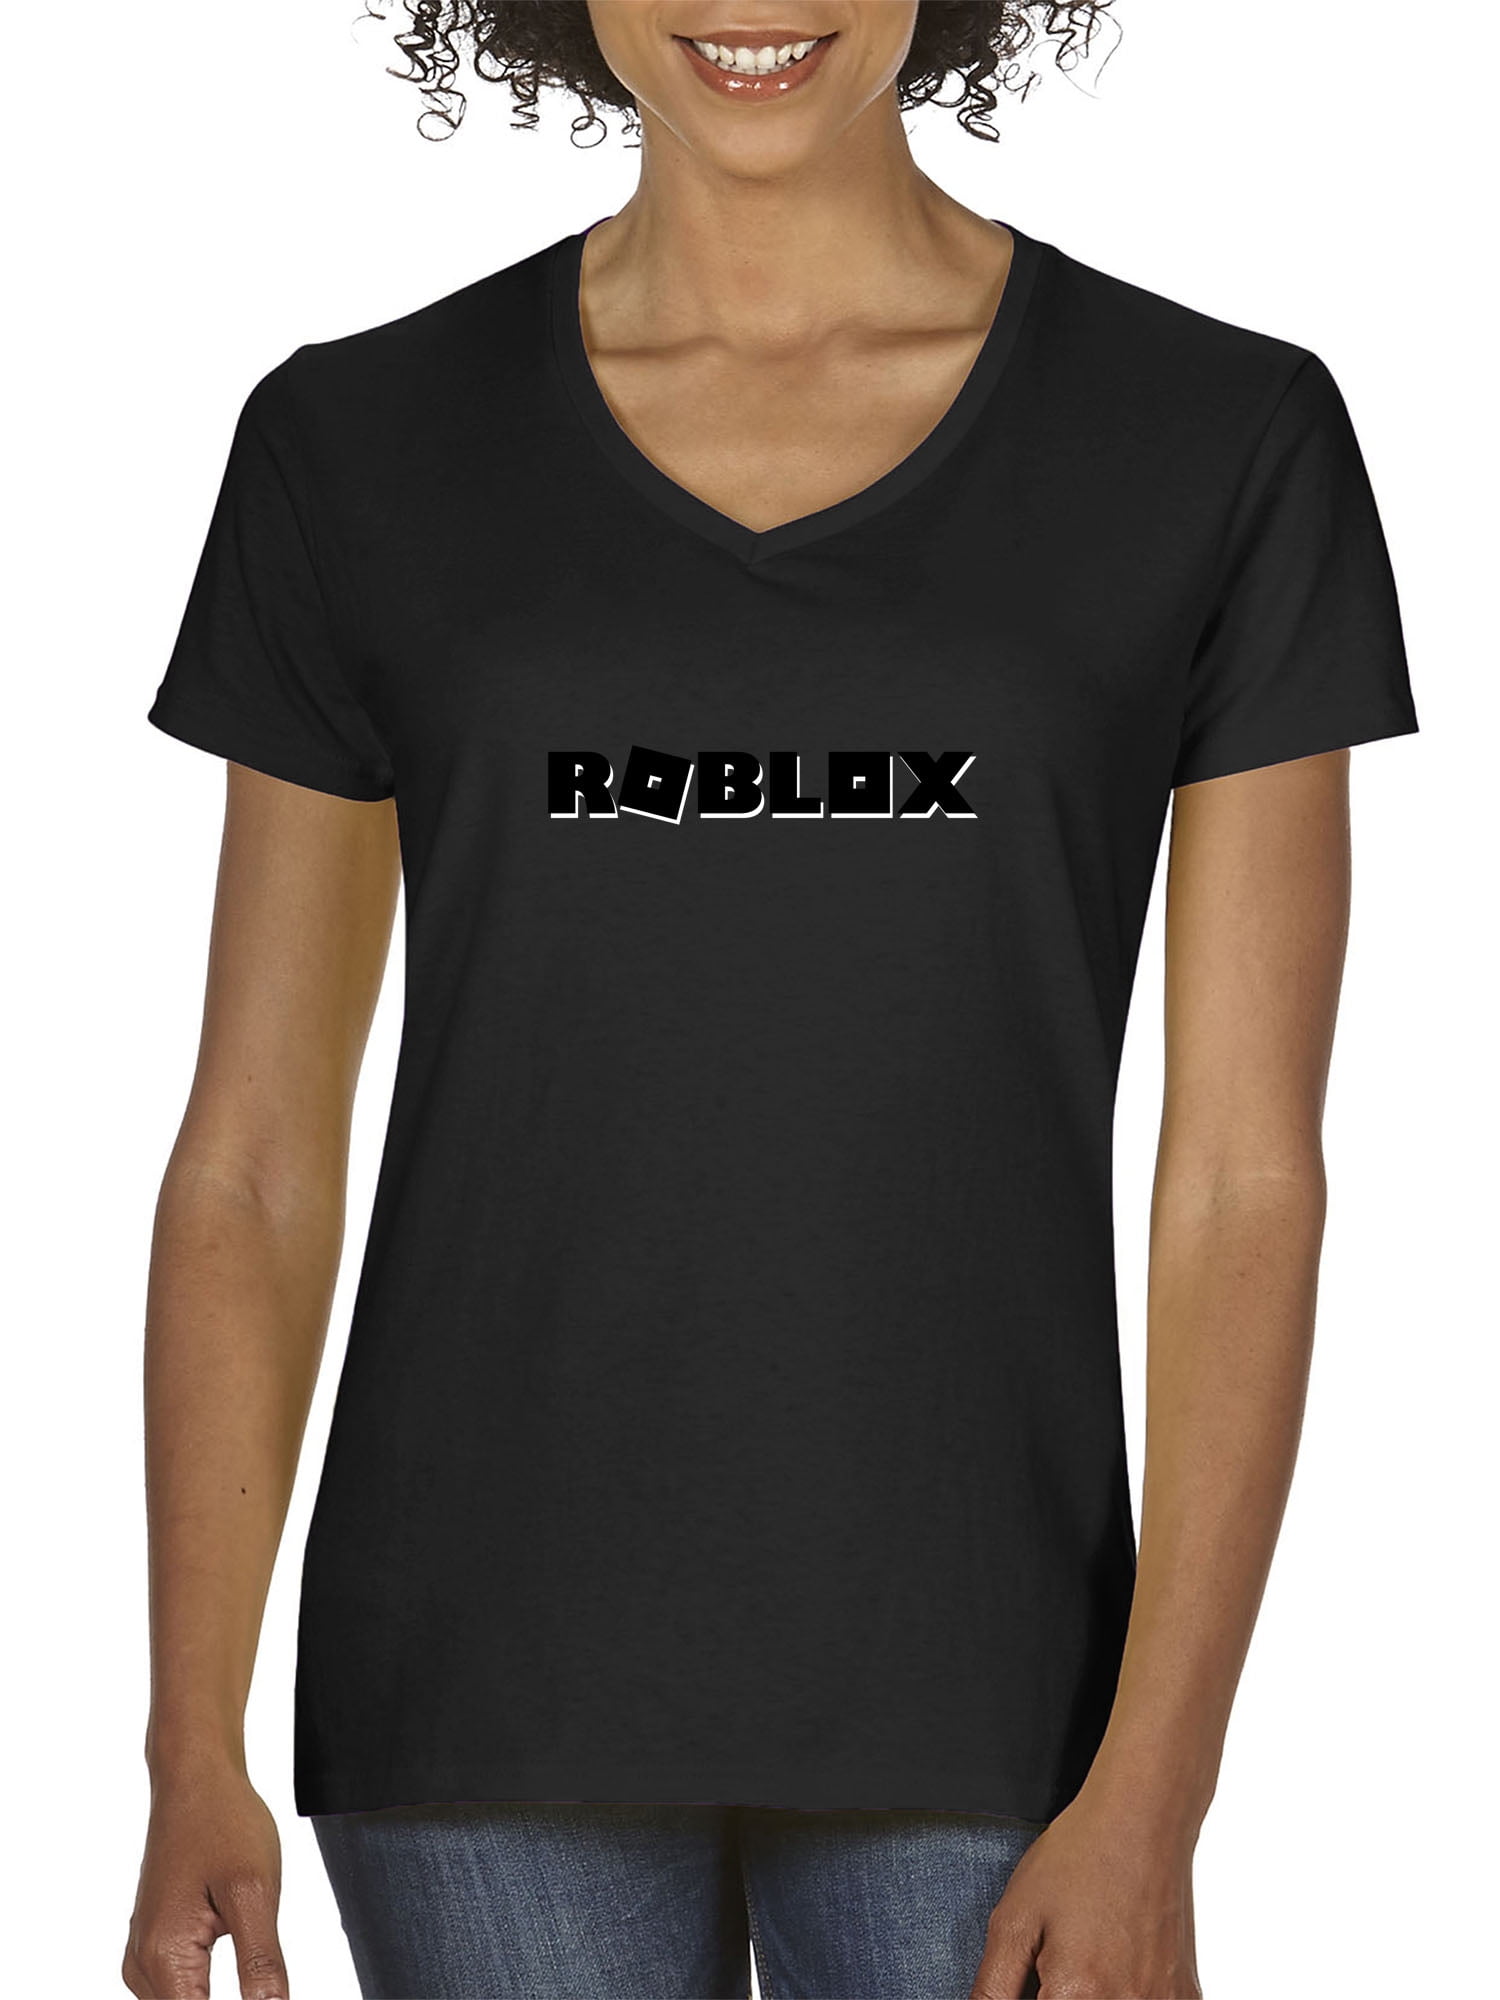 Trendy Usa Trendy Usa 1168 Women S V Neck T Shirt Roblox Block